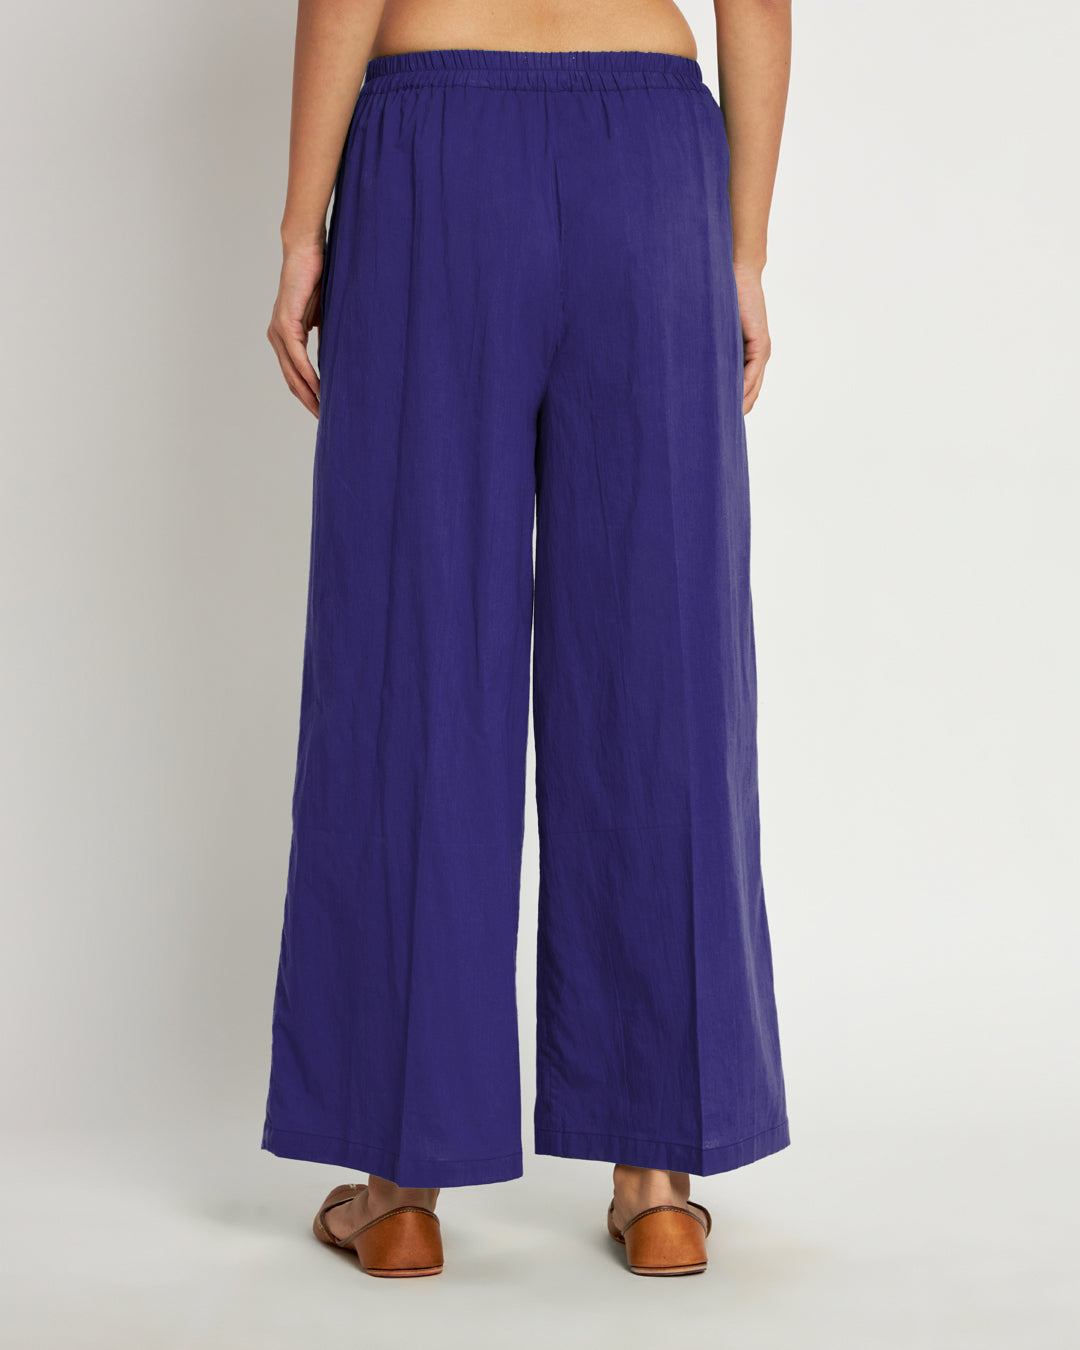 Combo: Iced Grey & Aurora Purple Wide Pants- Set Of 2